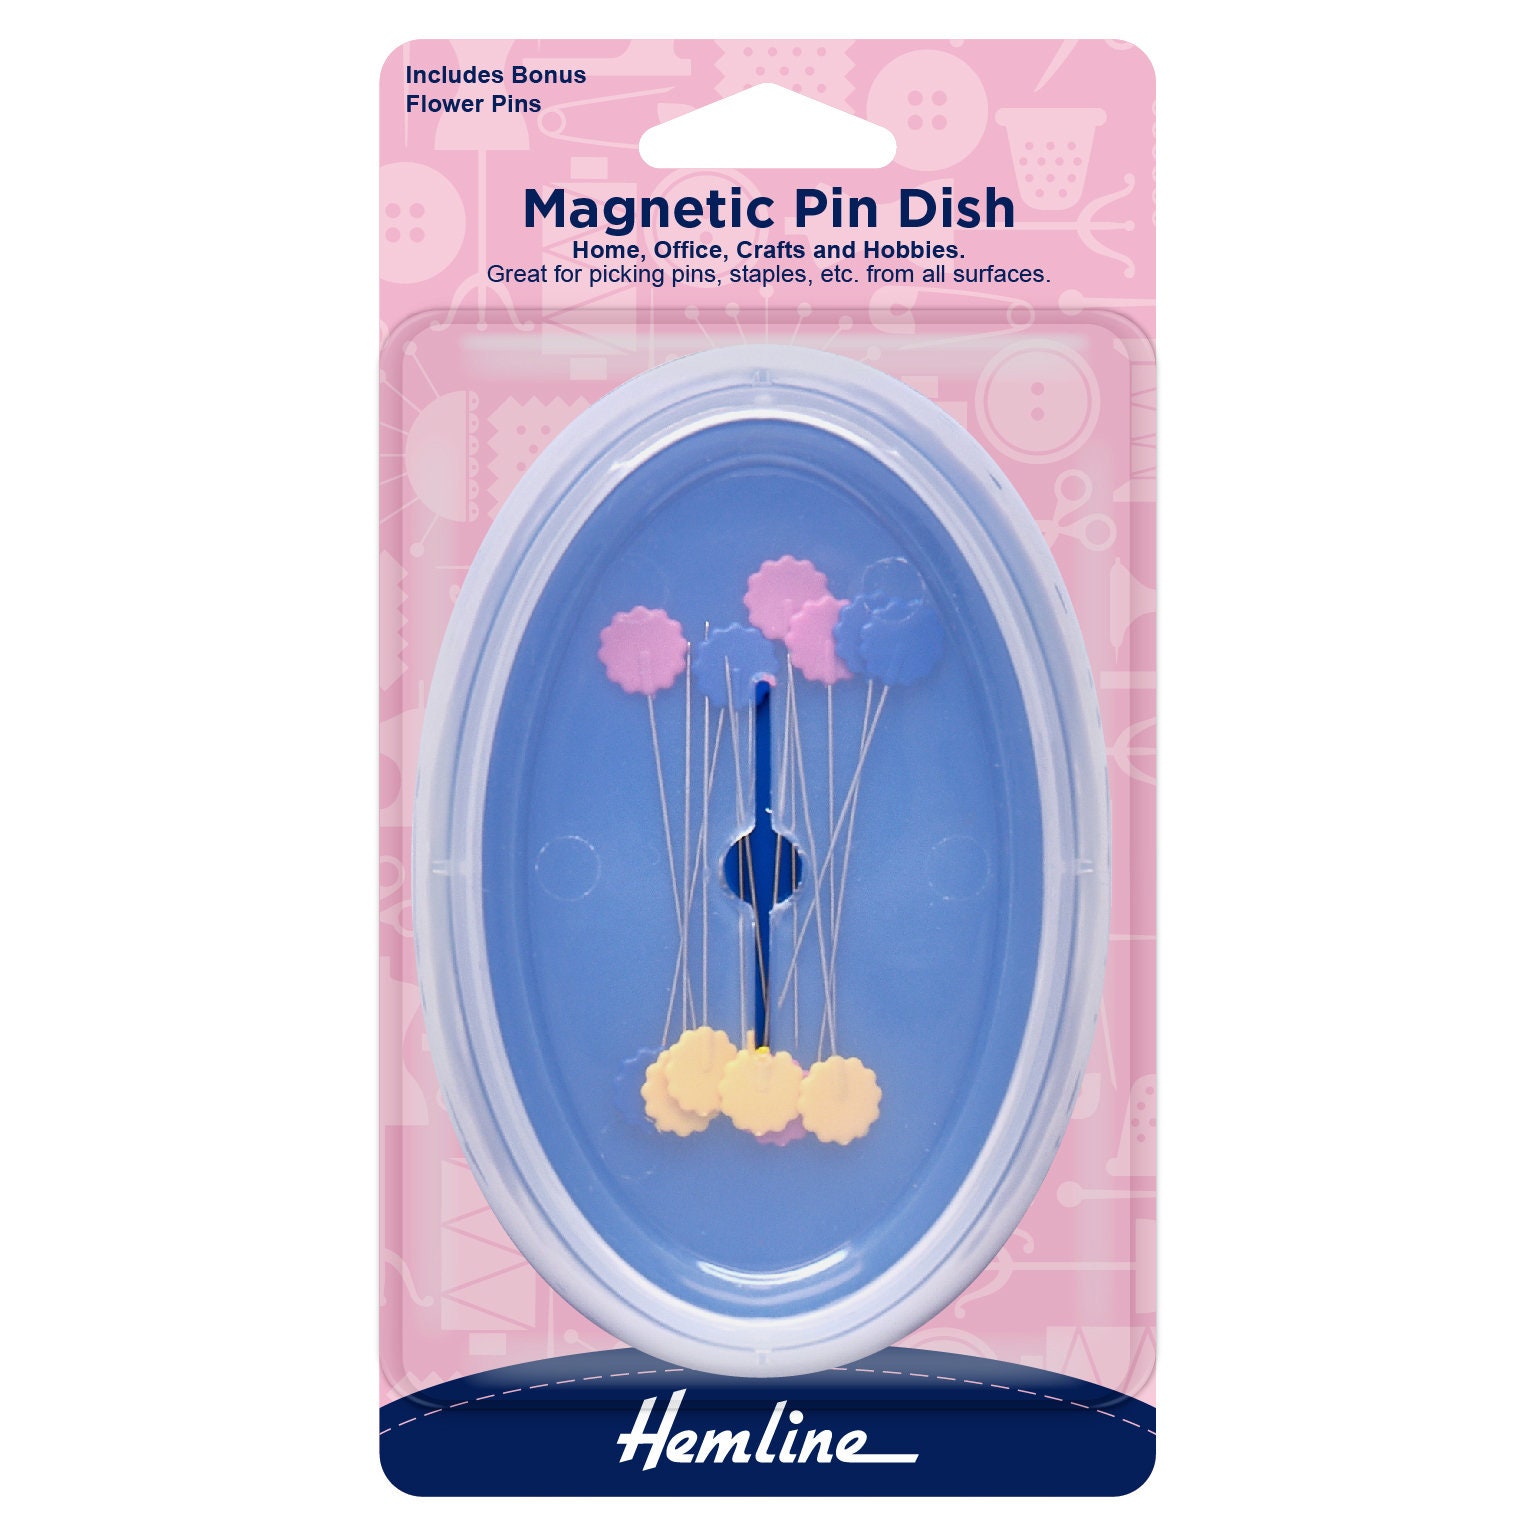 Hemline Magnetic Pin Dish - Rose Gold